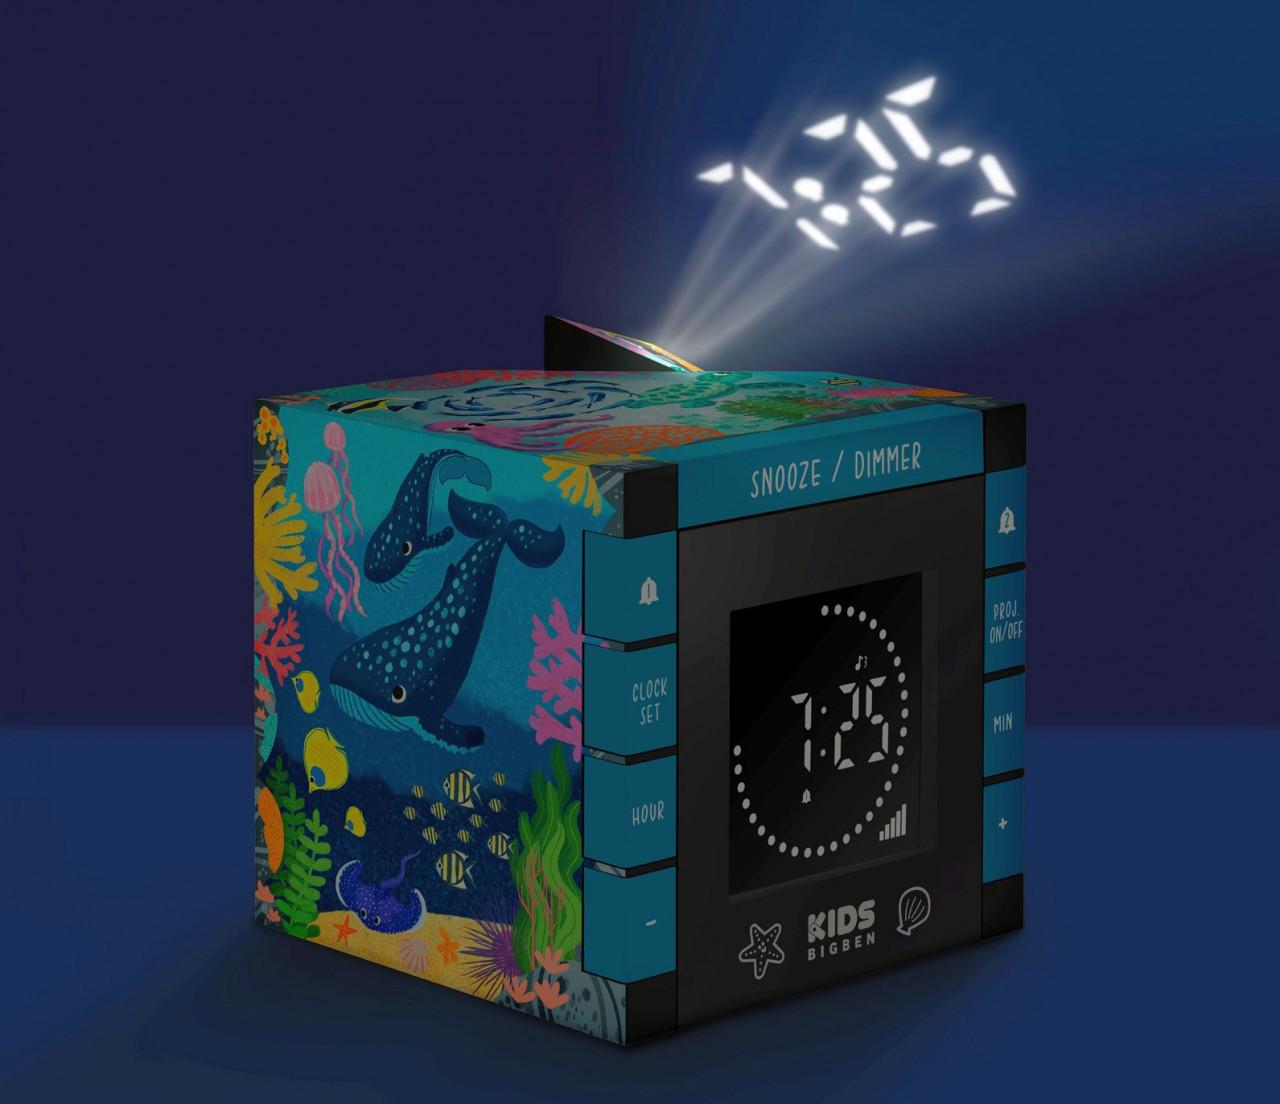 bigben  Bigben Interactive R70 – Ocean Orologio Analogico Multicolore 